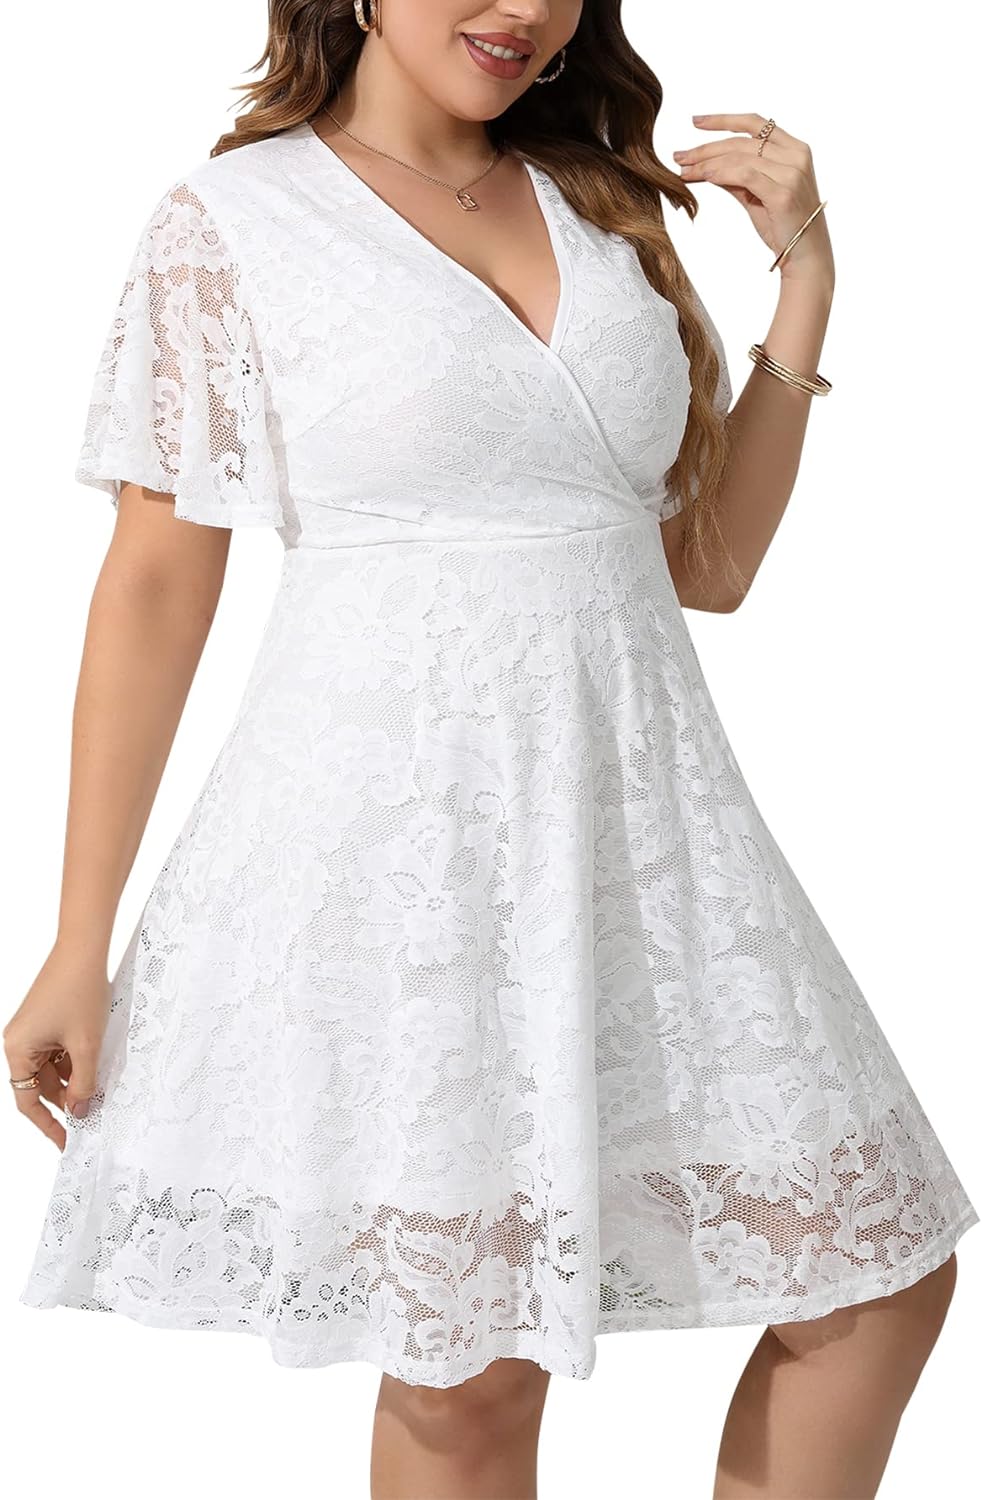 Women Lace Plus Size Cocktail Dress for Wedding Guest V Neck Short Sleeve Flowy A Line Knee Length Dresses White 5XL